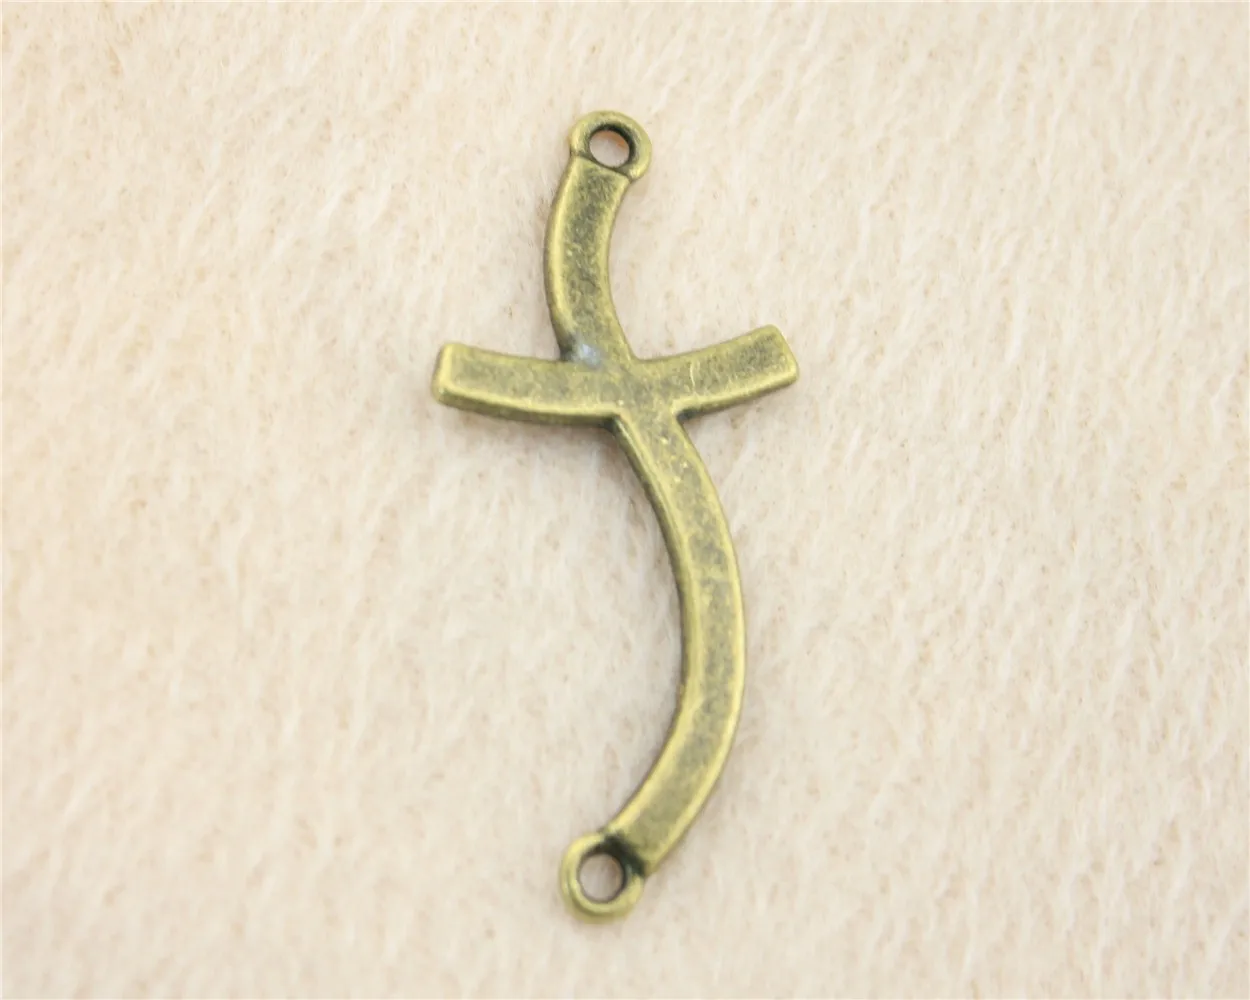 

35pcs/lot 45*20mm ancient bronze Cross Connector charm Pendants DIY jewelry for bracelet necklace earring